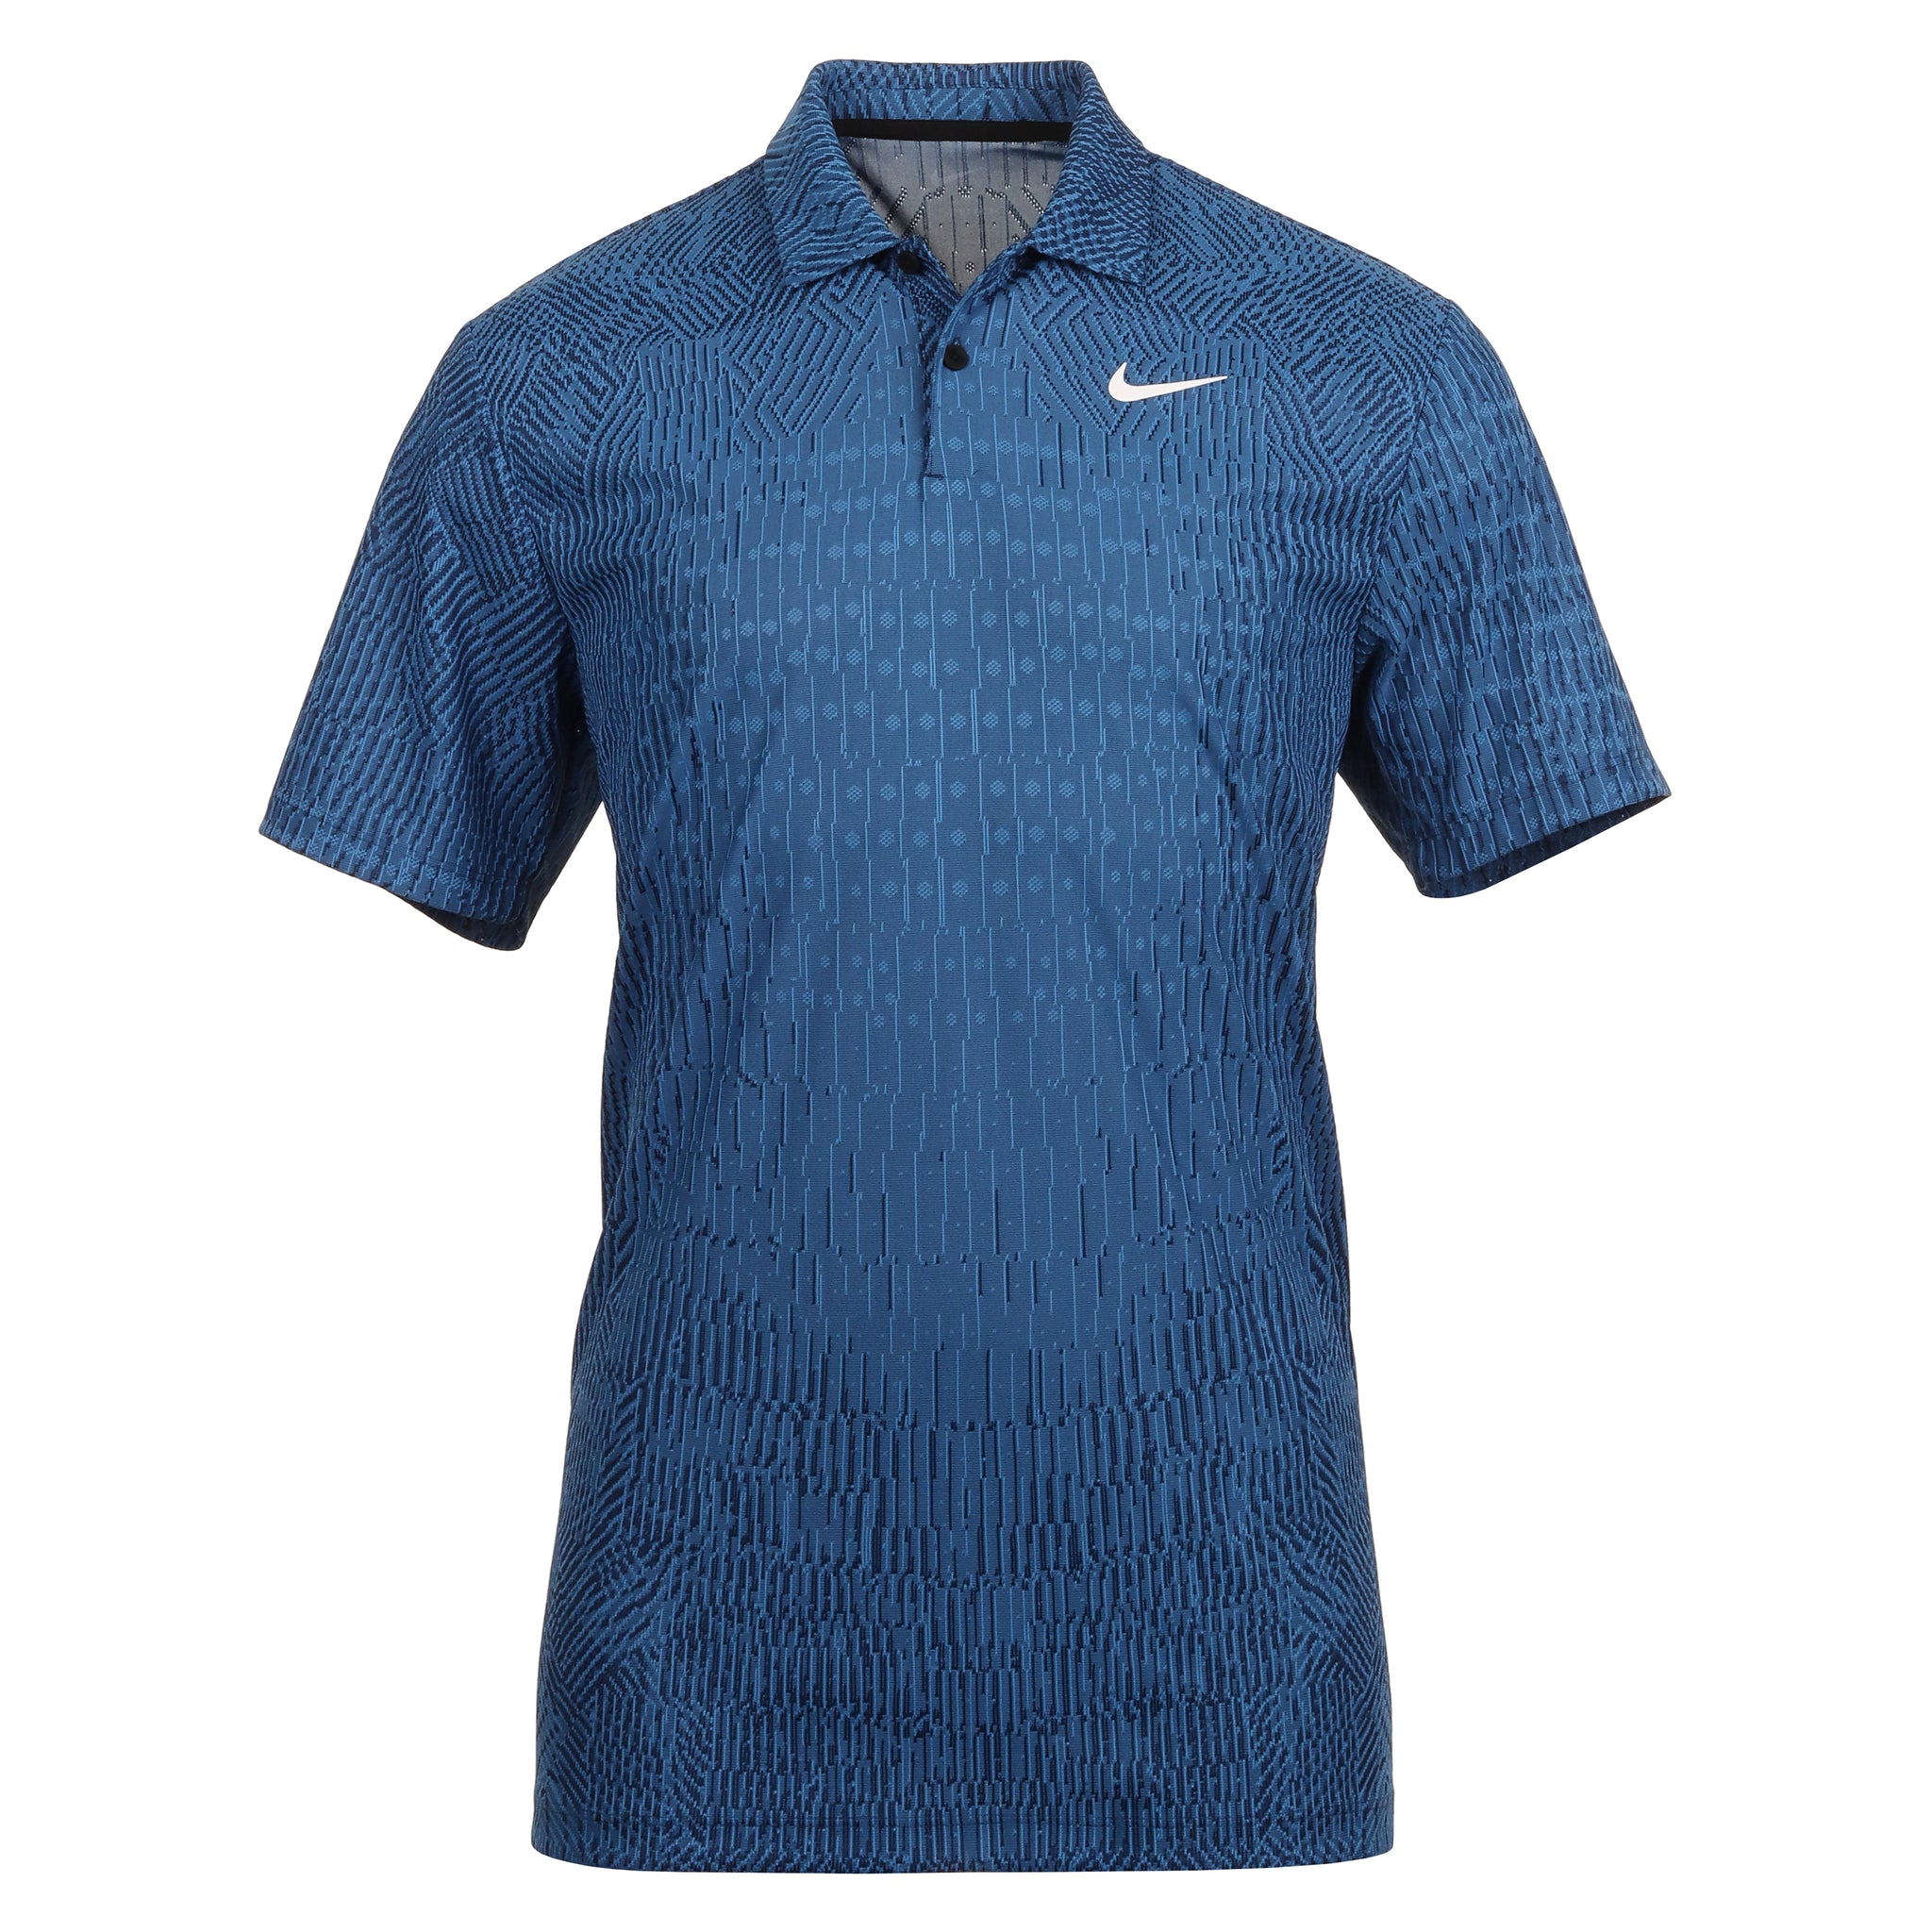 nike-golf-dri-fit-adv-tour-shirt-fd5731-402-star-blue-navy